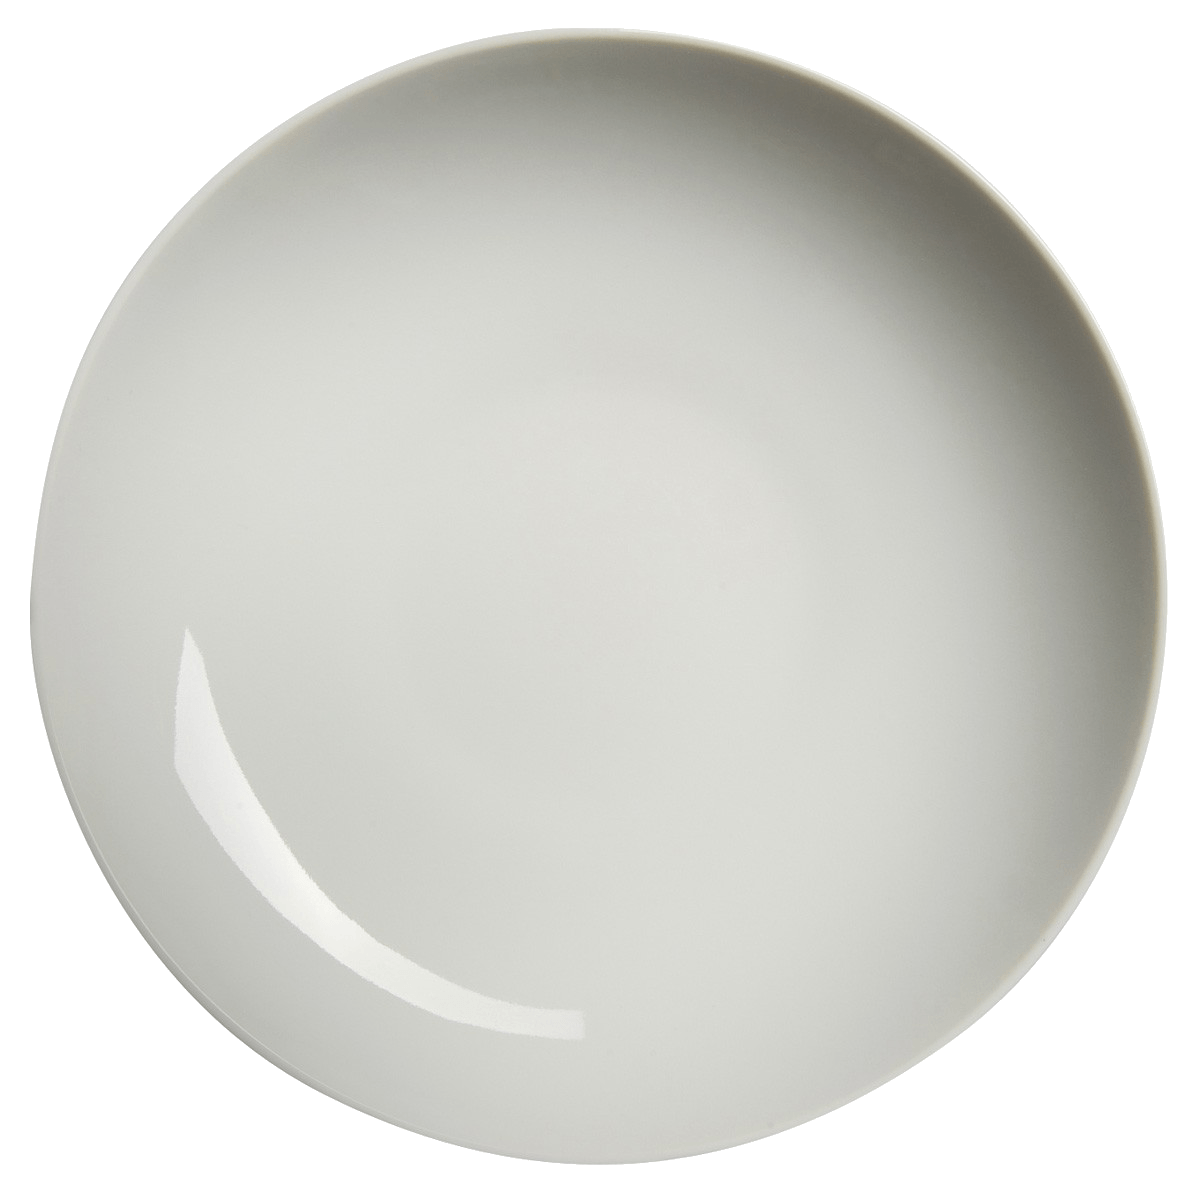 Dish Plate